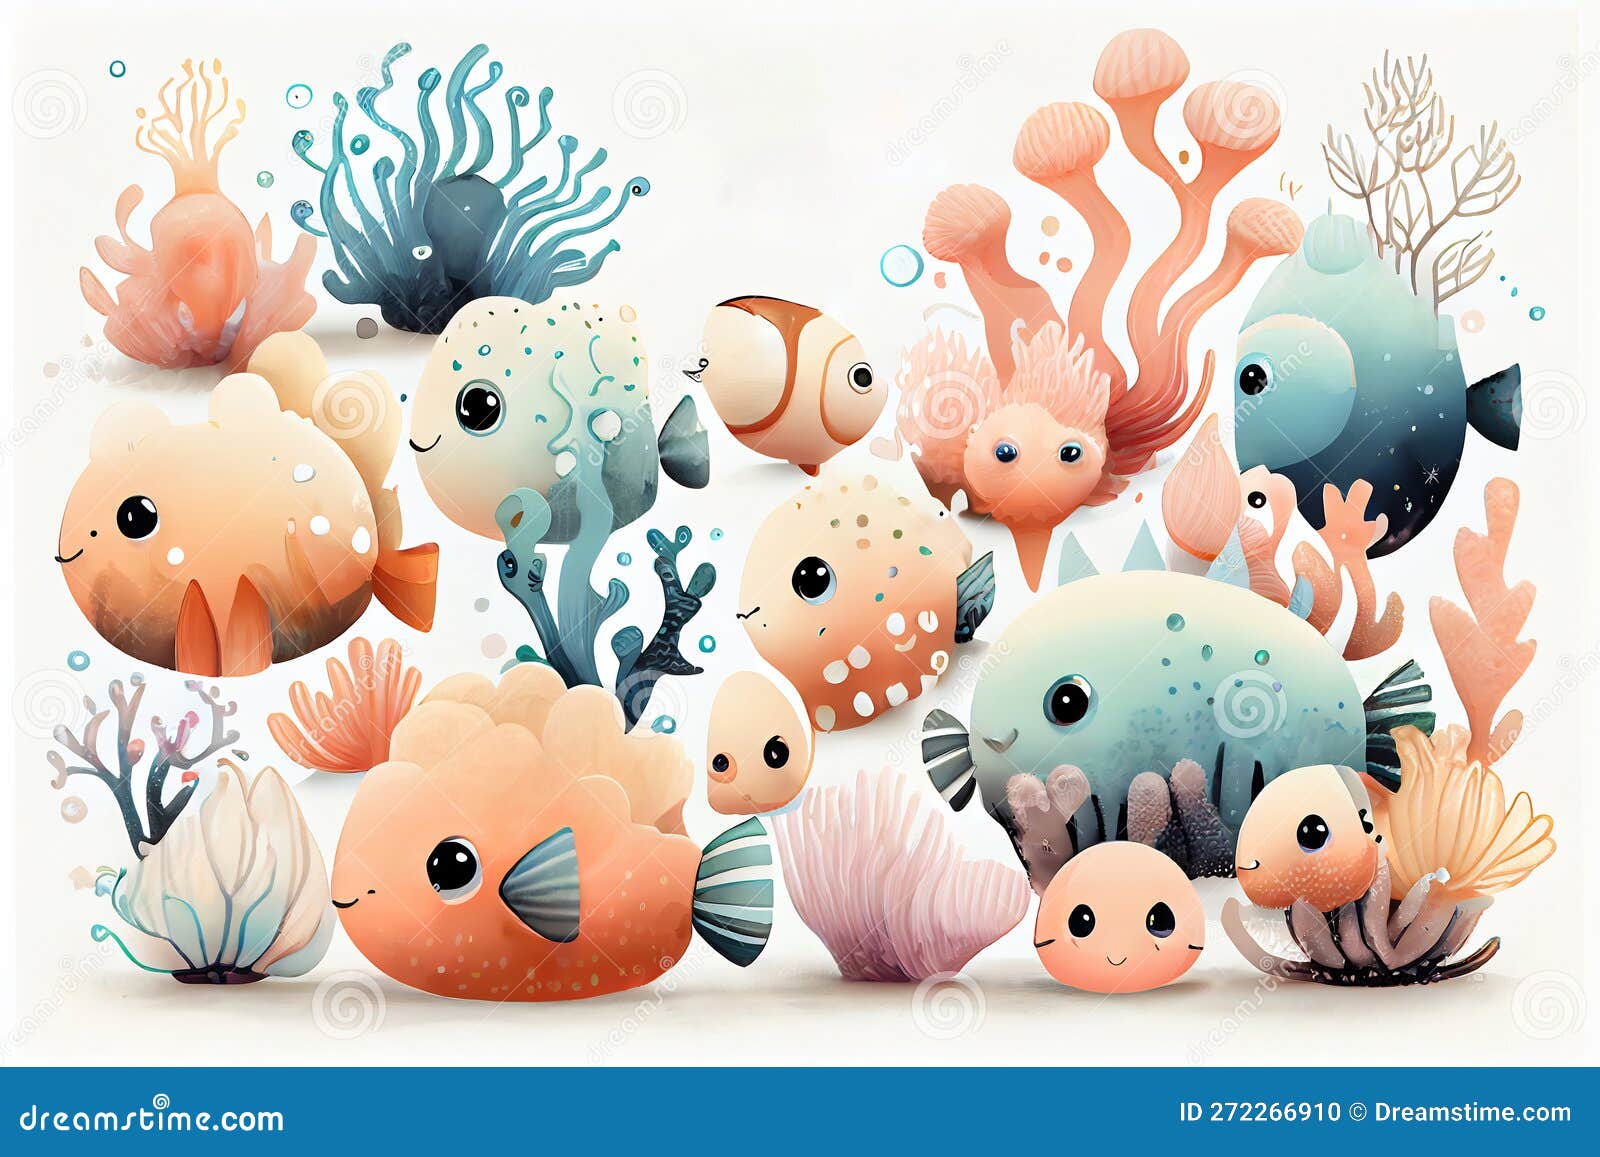 cute fish drawing - Clip Art Library